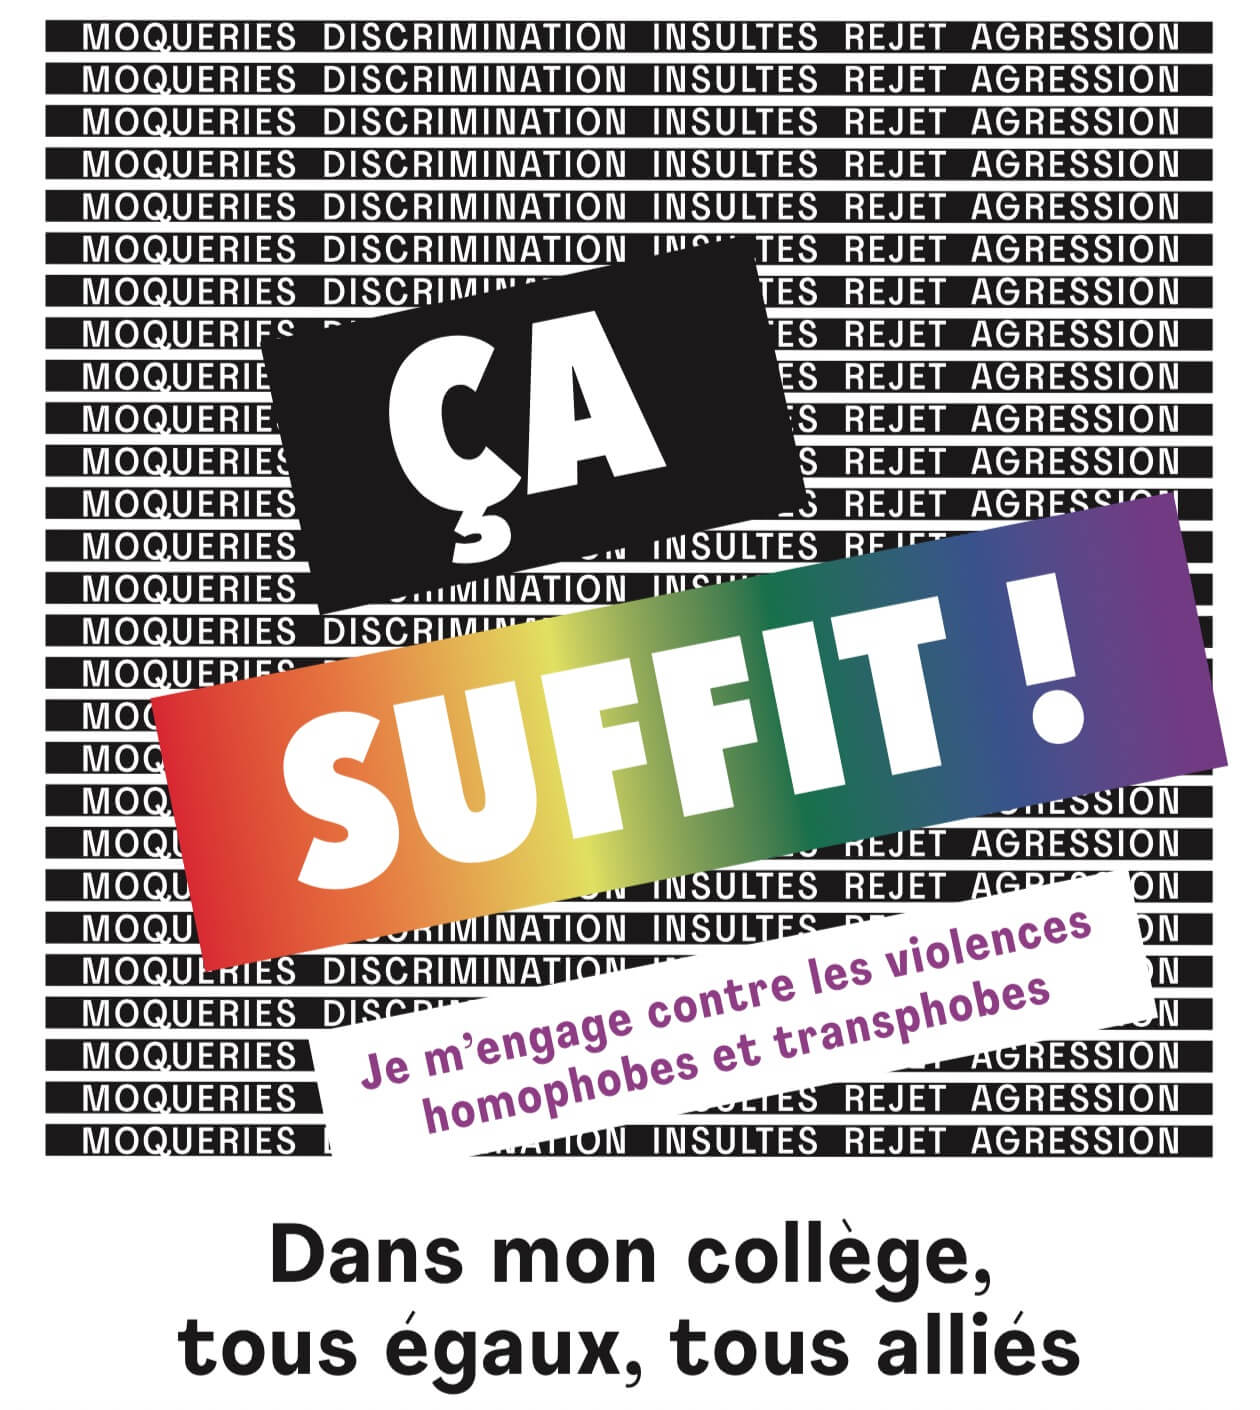 Francia, campagna contro il bullismo omofobo in tutte le scuole - Francia campagna contro il bullismo omofobo 4 - Gay.it